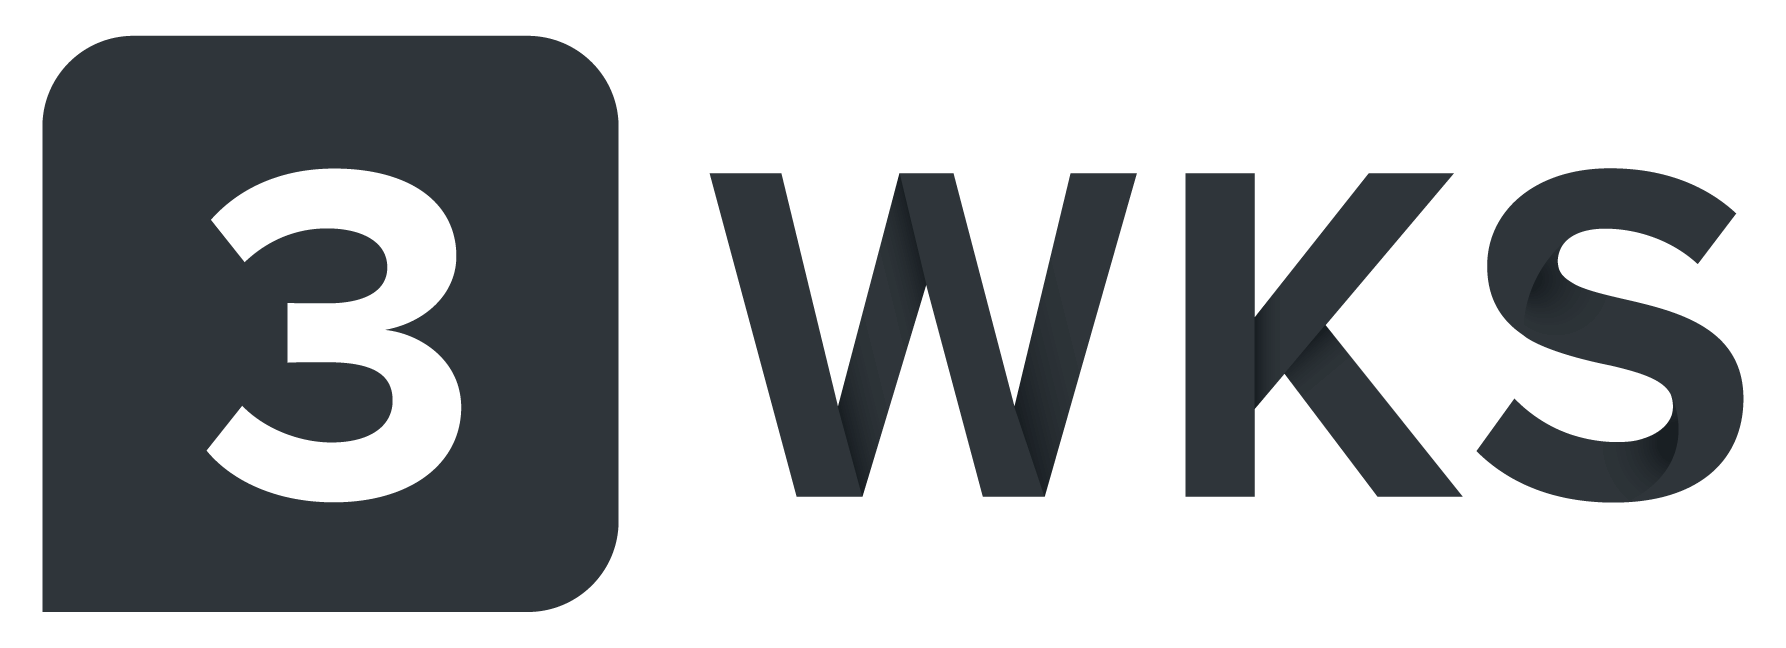 3wks-logo-ribbon.png